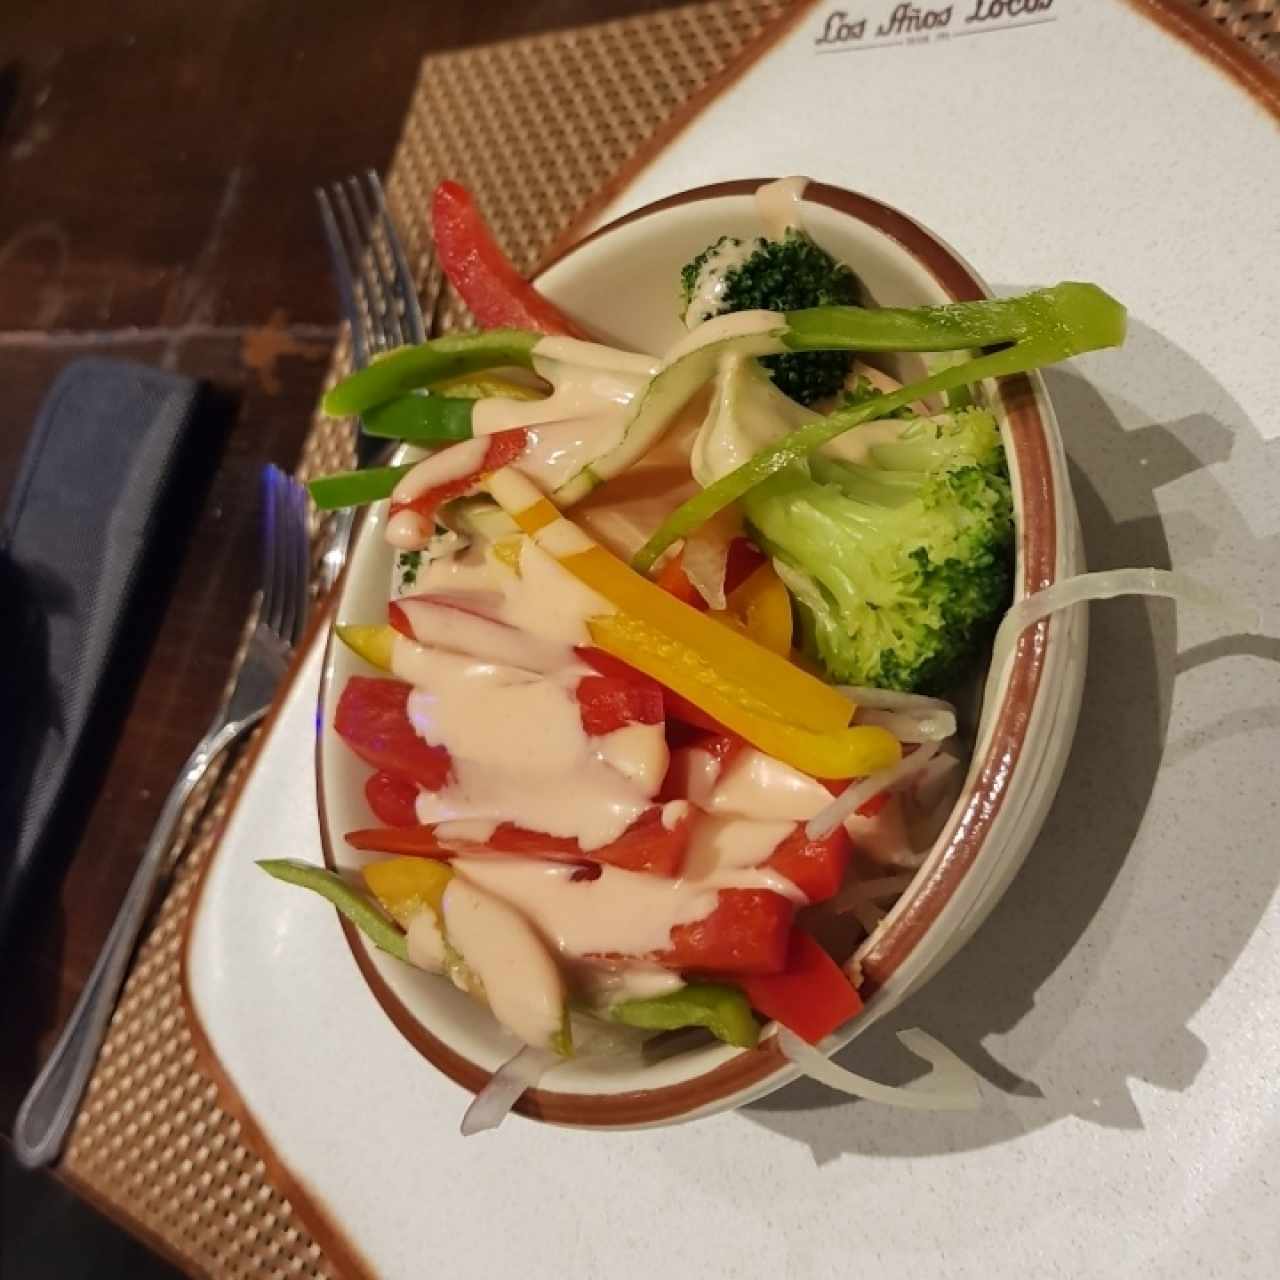 ENSALADAS - Salad bar